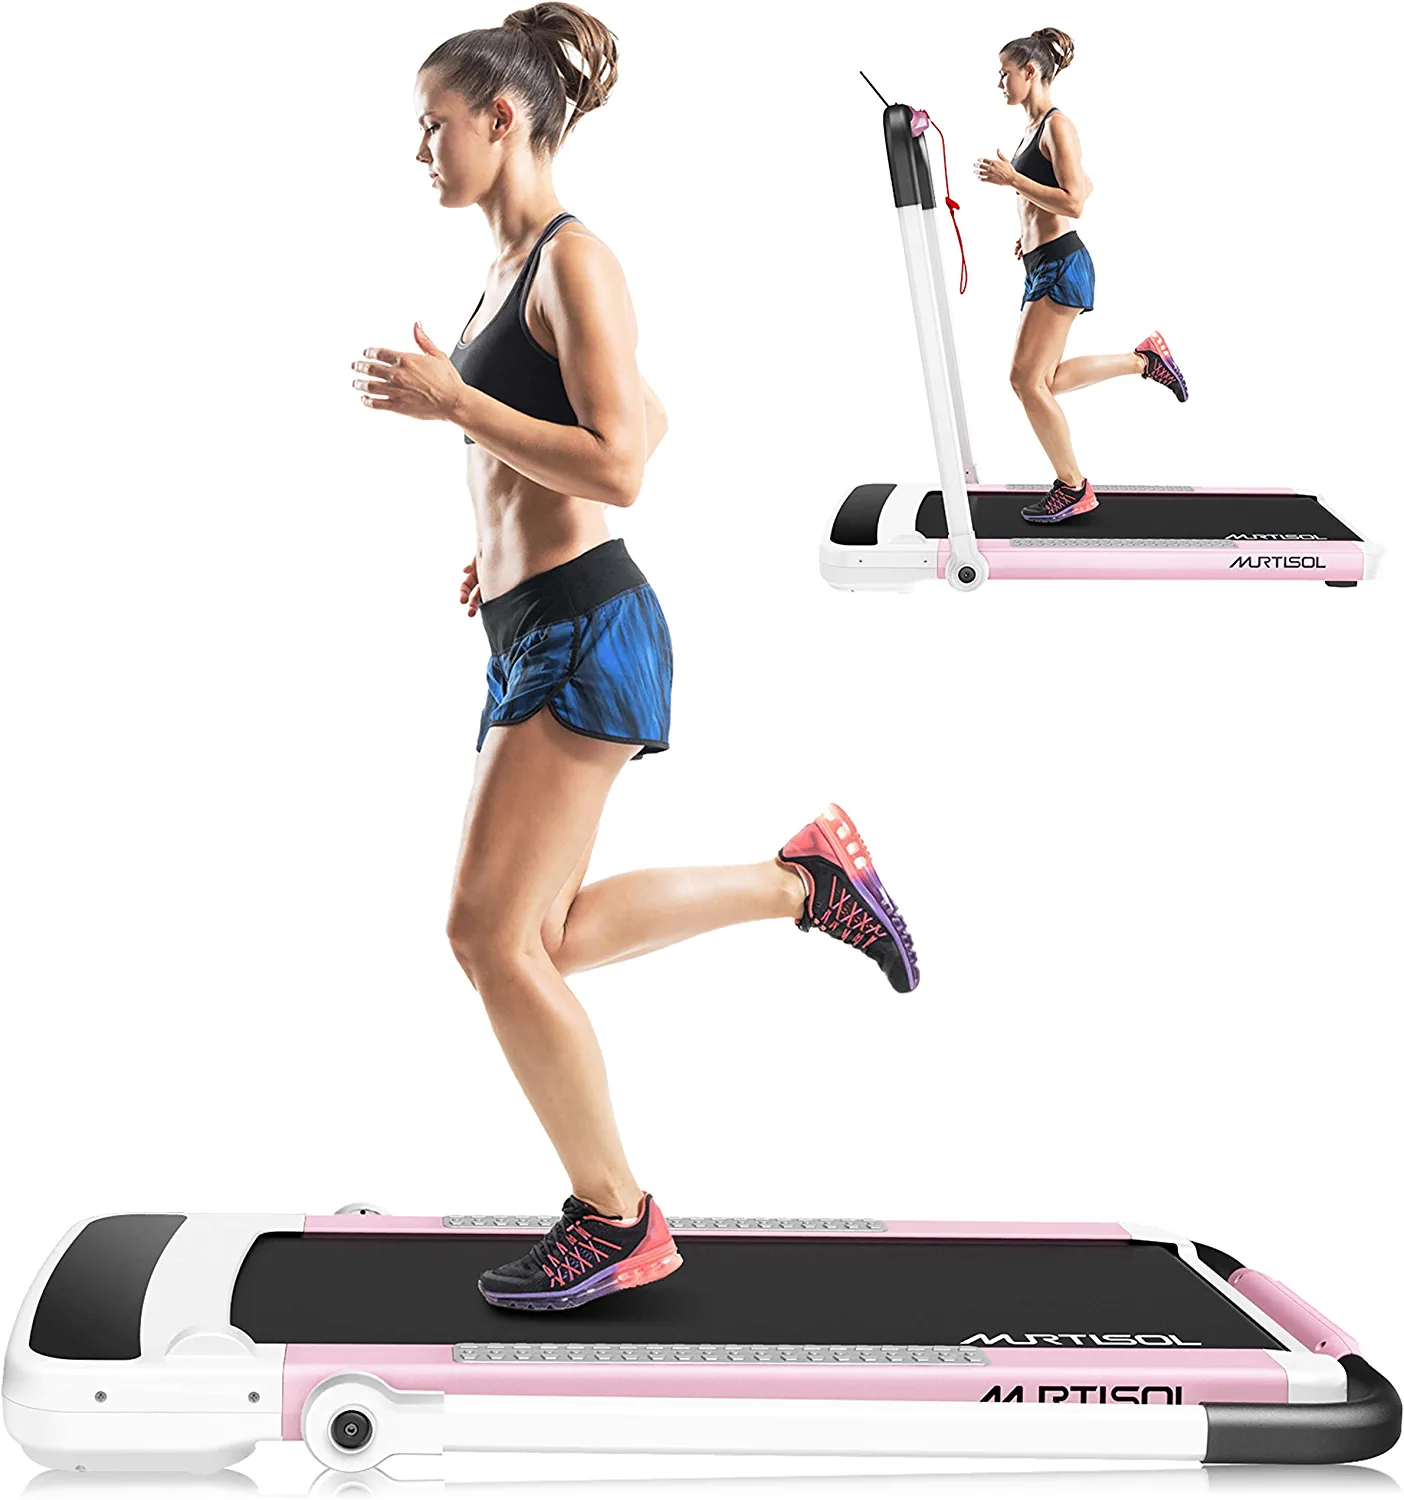 Murtisol 2-in-1 Folding Treadmill